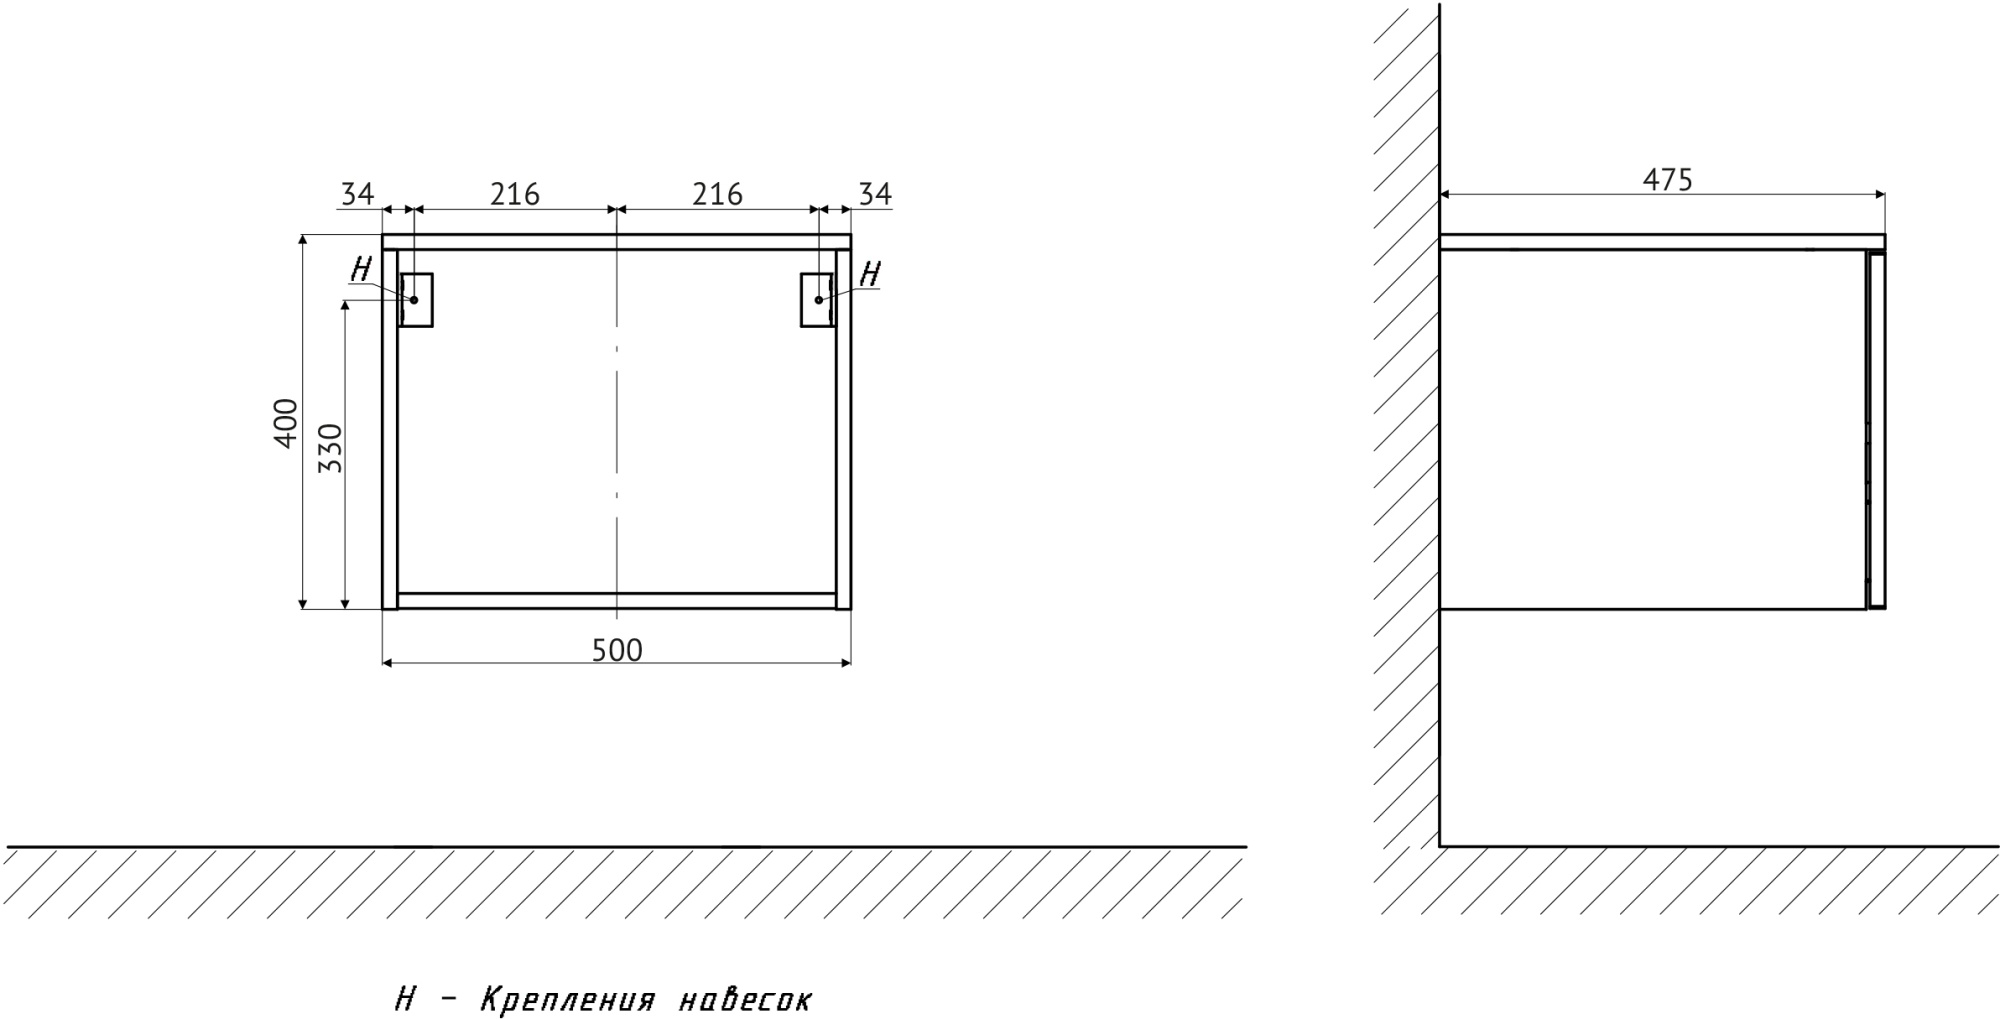  Комплект мебели STWORKI Ольборг 100 дуб карпентер, без отверстий, 2 тумбы 50 + 2 раковины